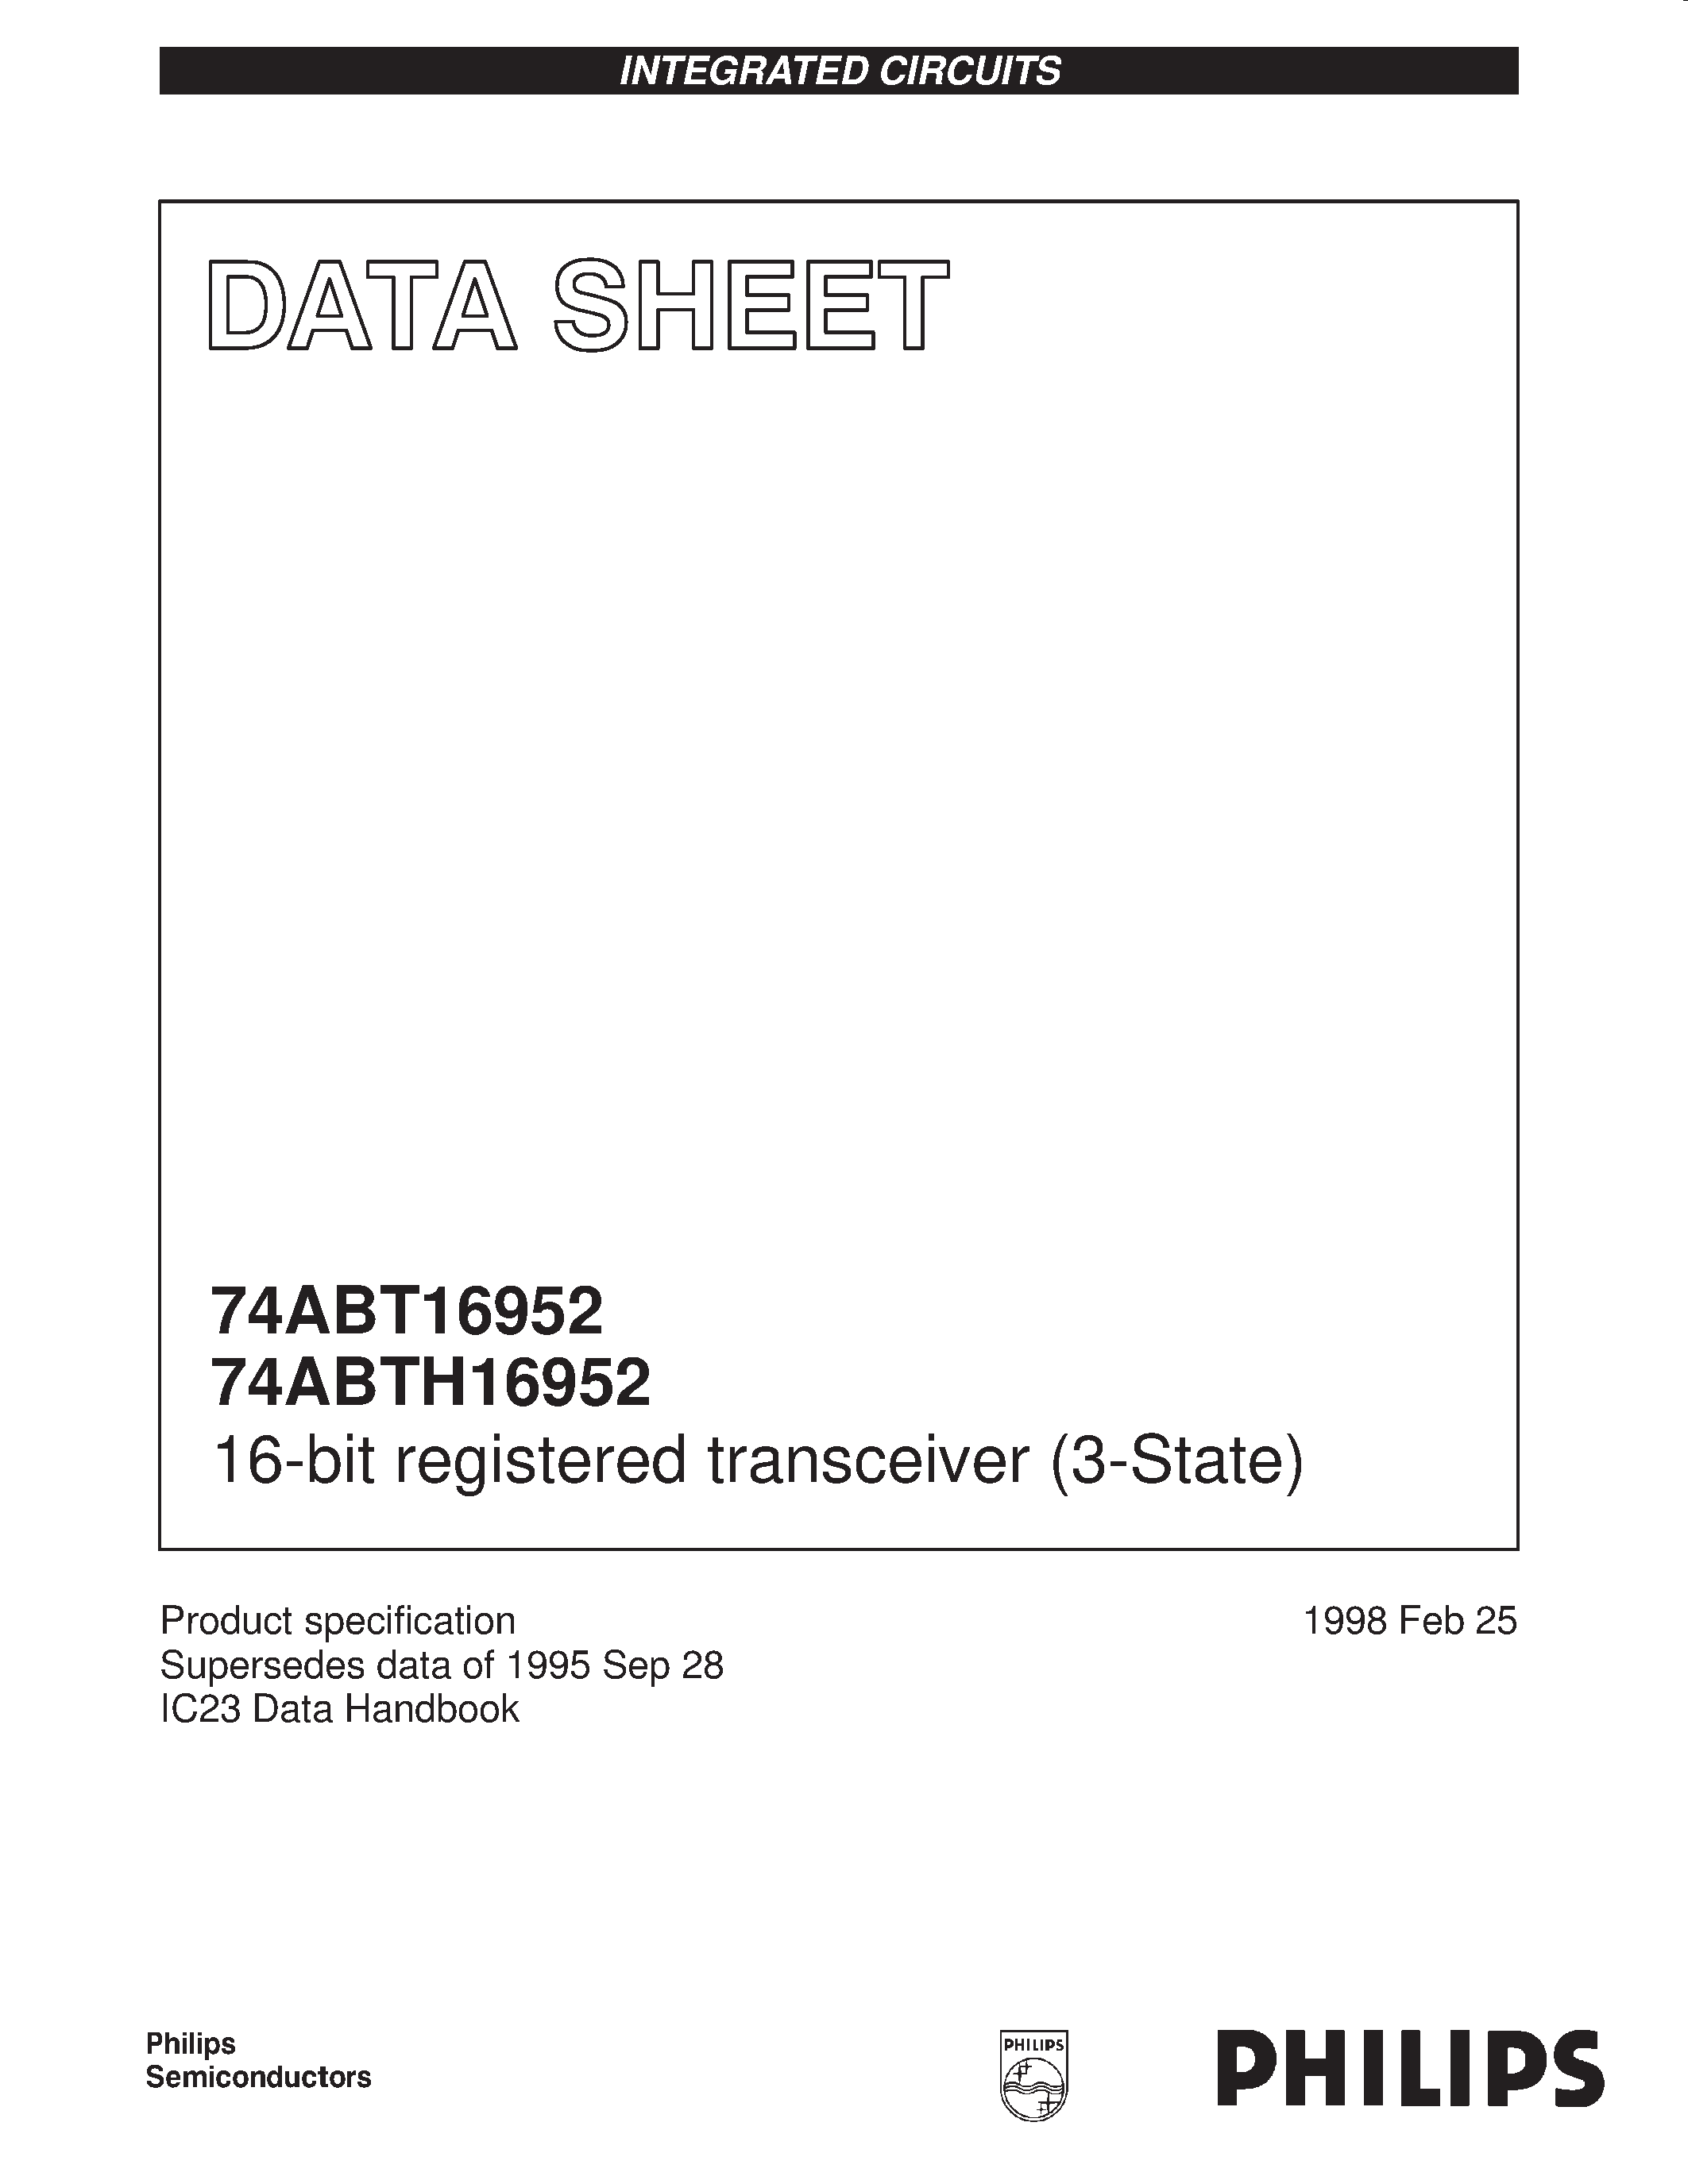 Даташит 74ABTH16952DGG - 16-bit registered transceiver 3-State страница 1